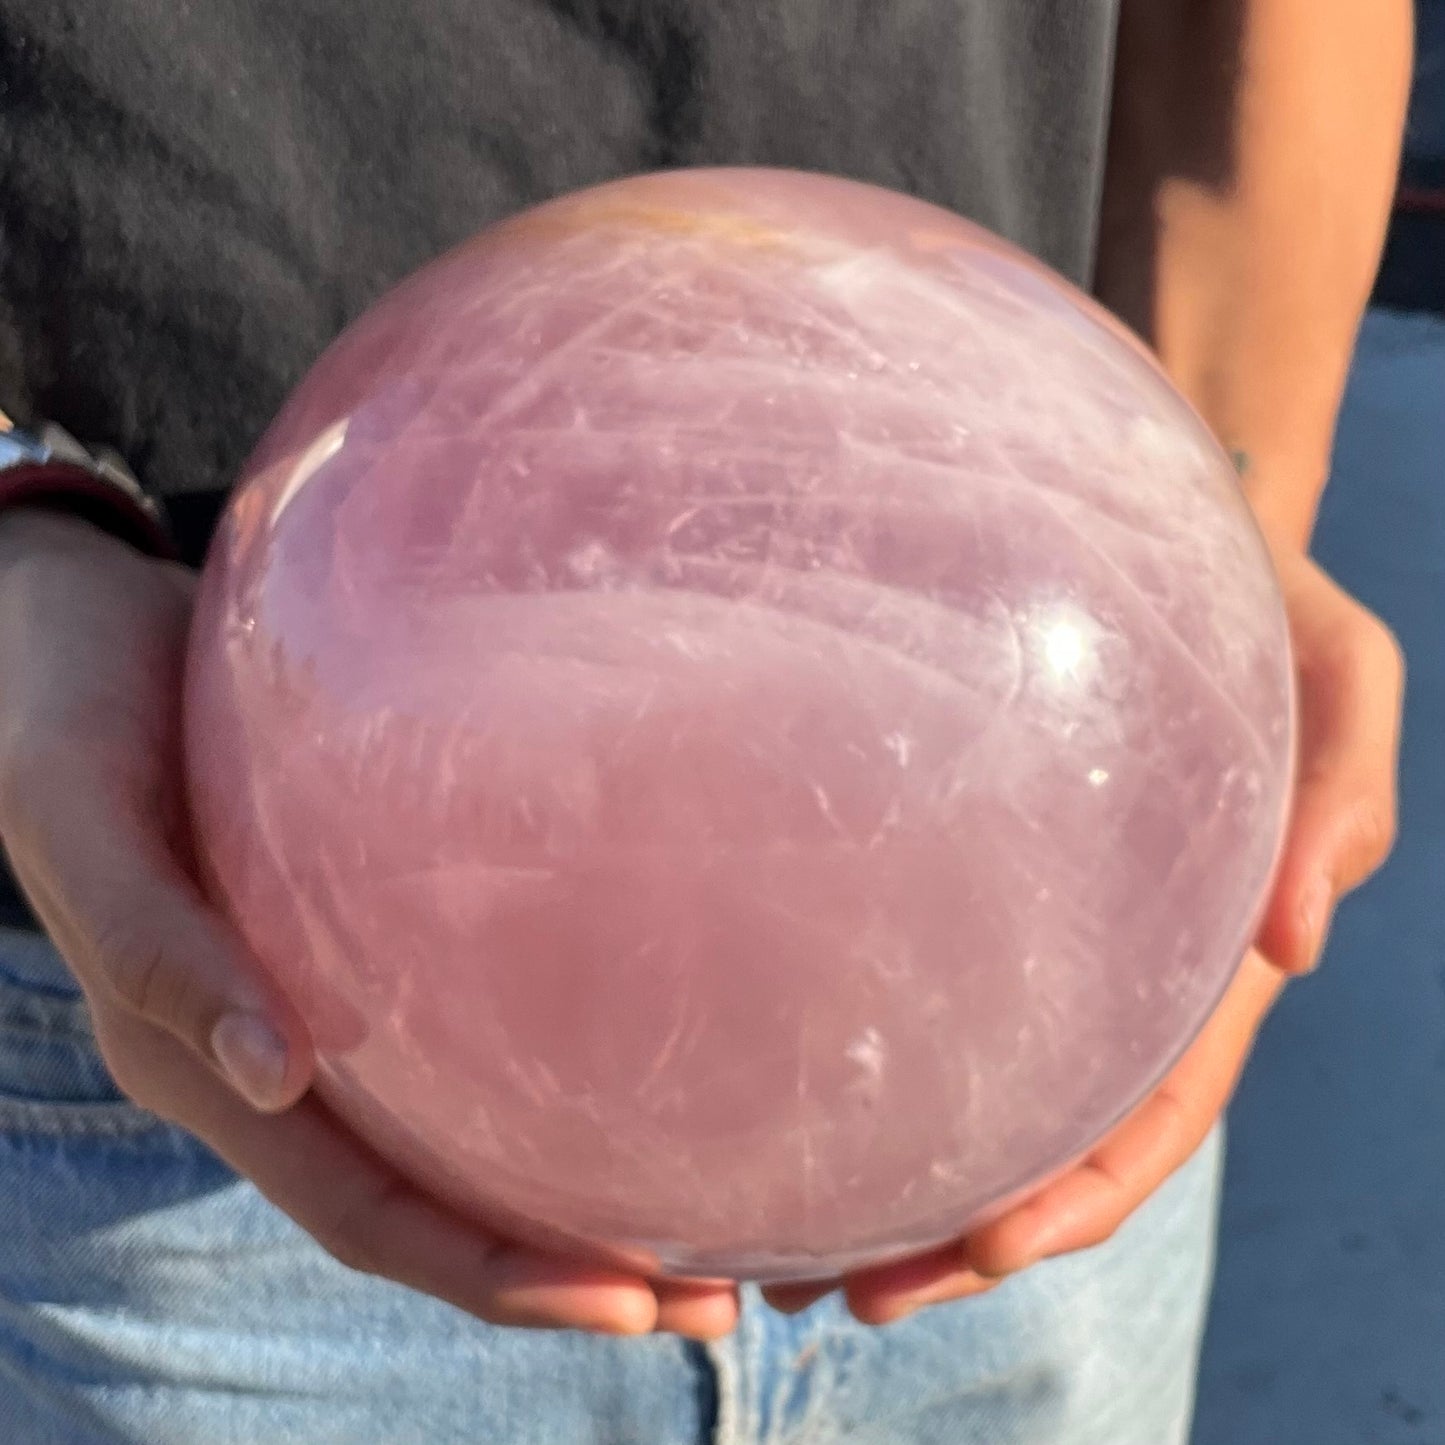 Lavender Quartz Crystal Sphere